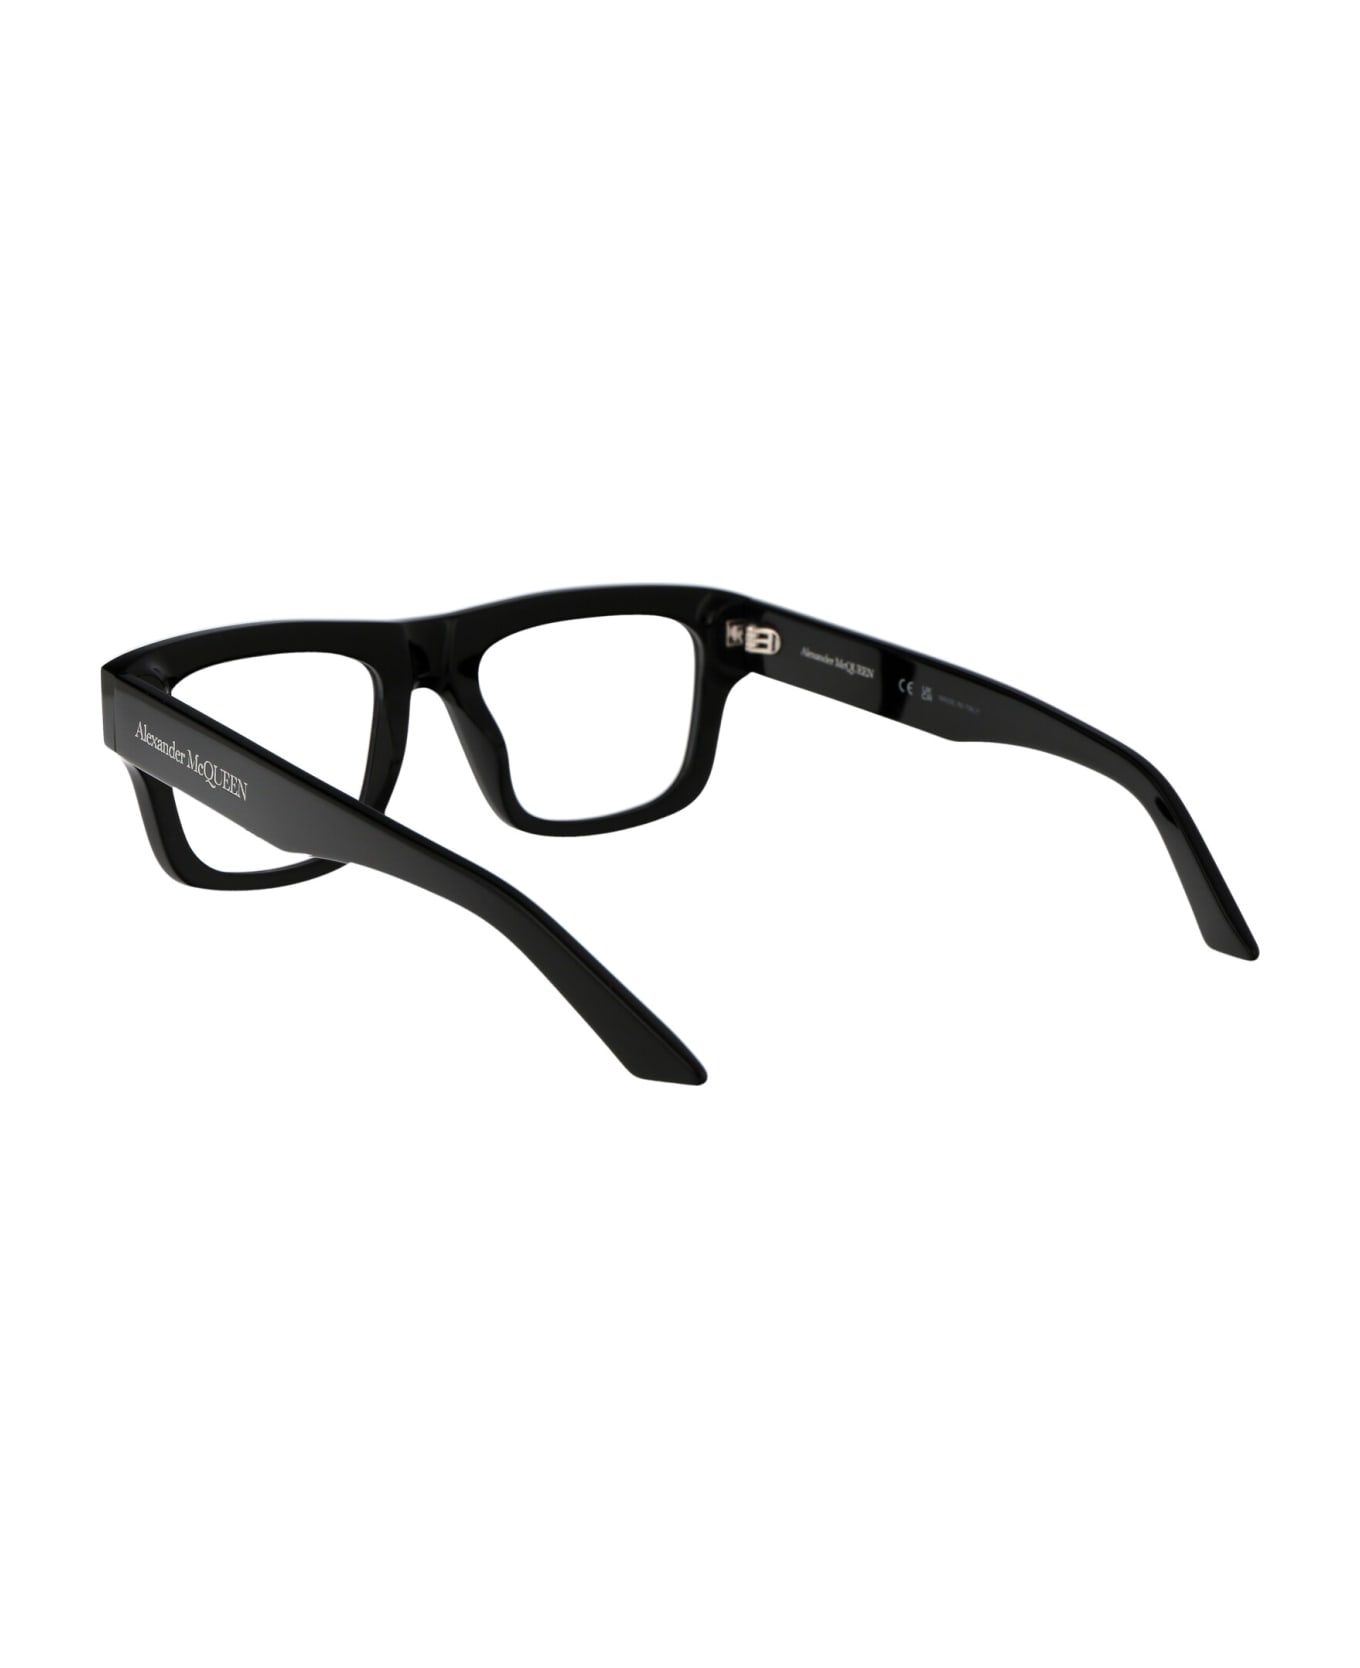 Alexander McQueen Eyewear Am0452o Glasses - 001 BLACK BLACK TRANSPARENT アイウェア